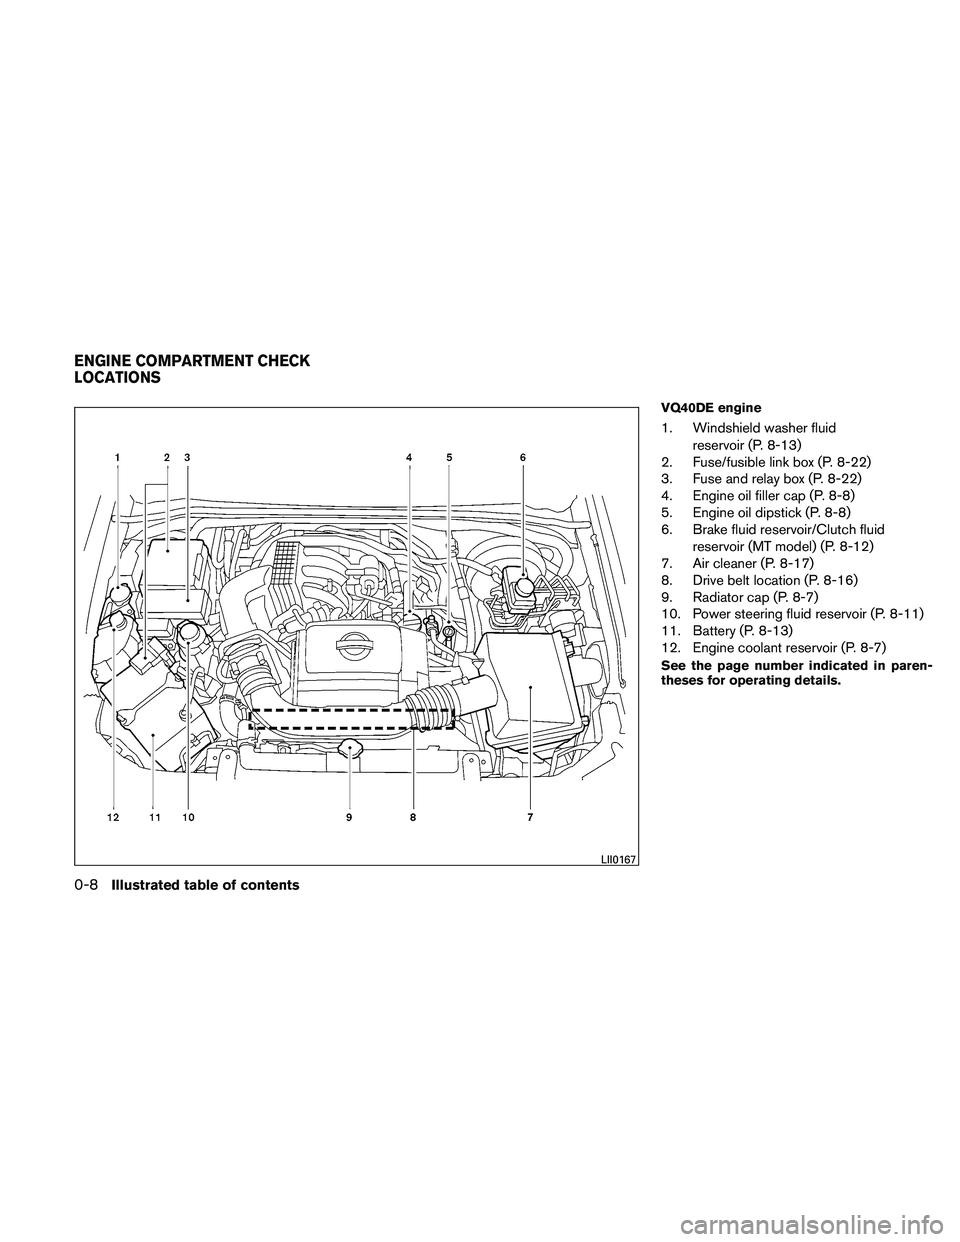 NISSAN XTERRA 2010  Owner´s Manual VQ40DE engine
1. Windshield washer fluidreservoir (P. 8-13)
2. Fuse/fusible link box (P. 8-22)
3. Fuse and relay box (P. 8-22)
4. Engine oil filler cap (P. 8-8)
5. Engine oil dipstick (P. 8-8)
6. Brak